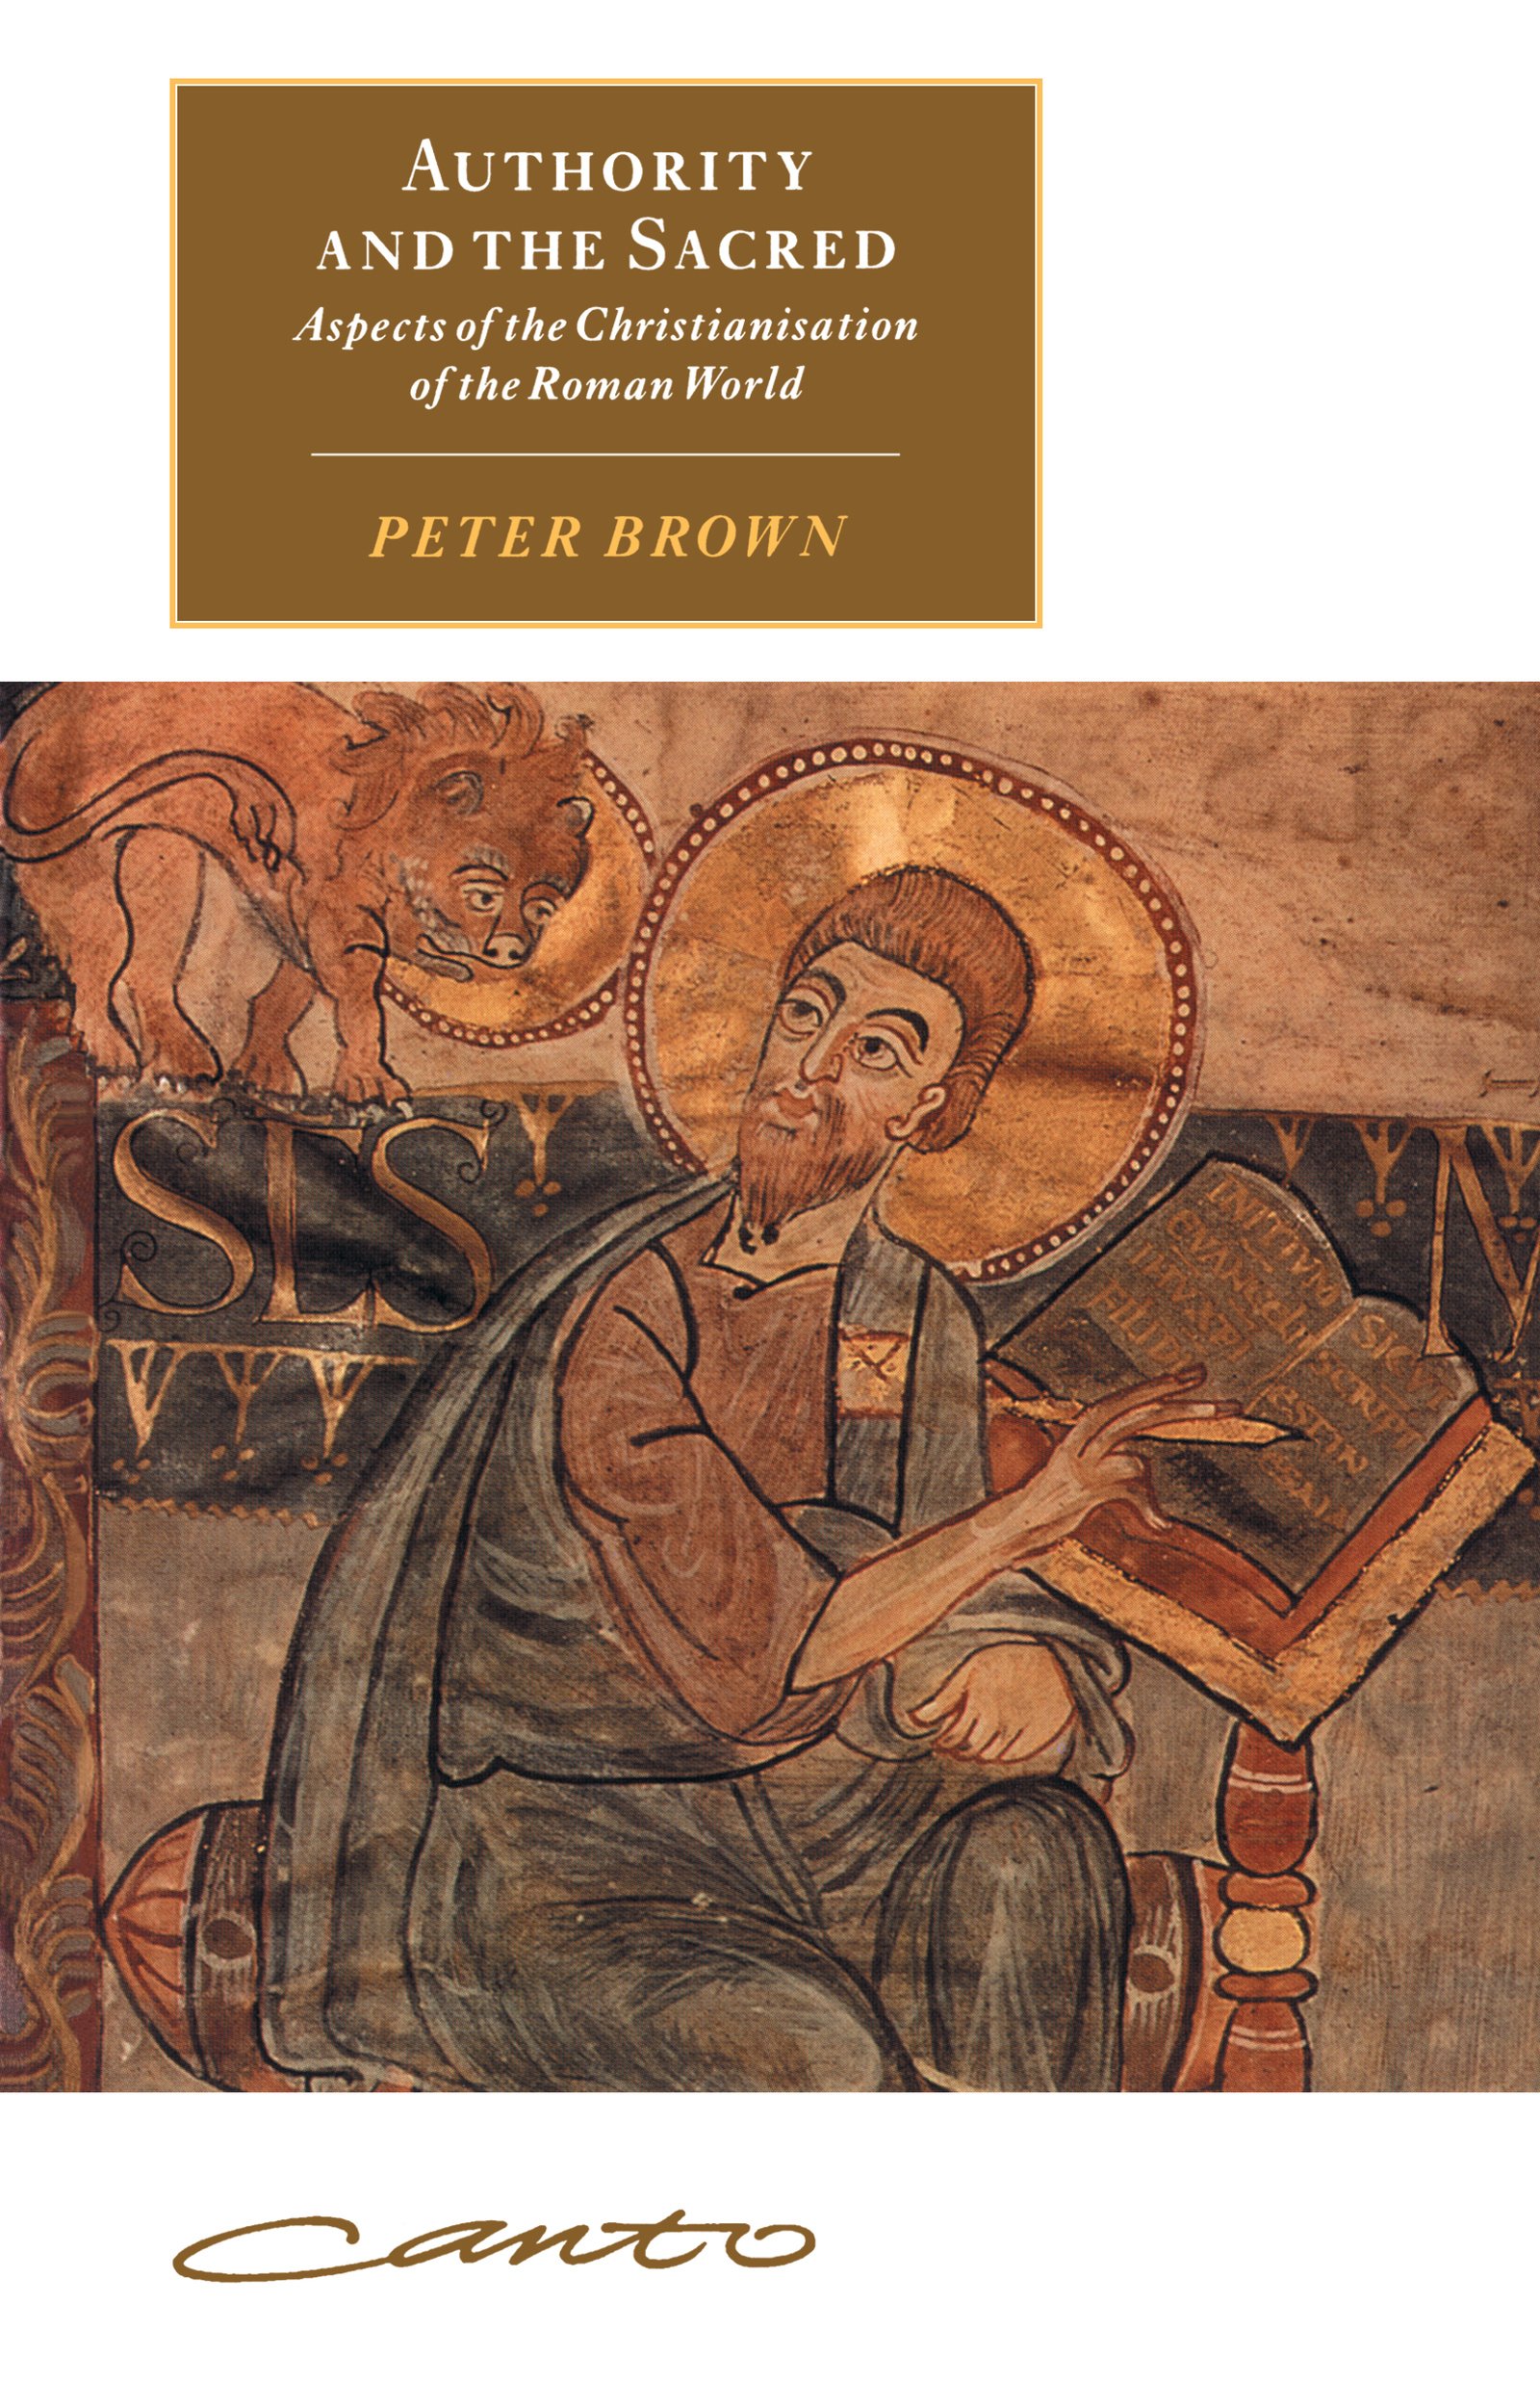 Aspects of Christianization of the Roman World